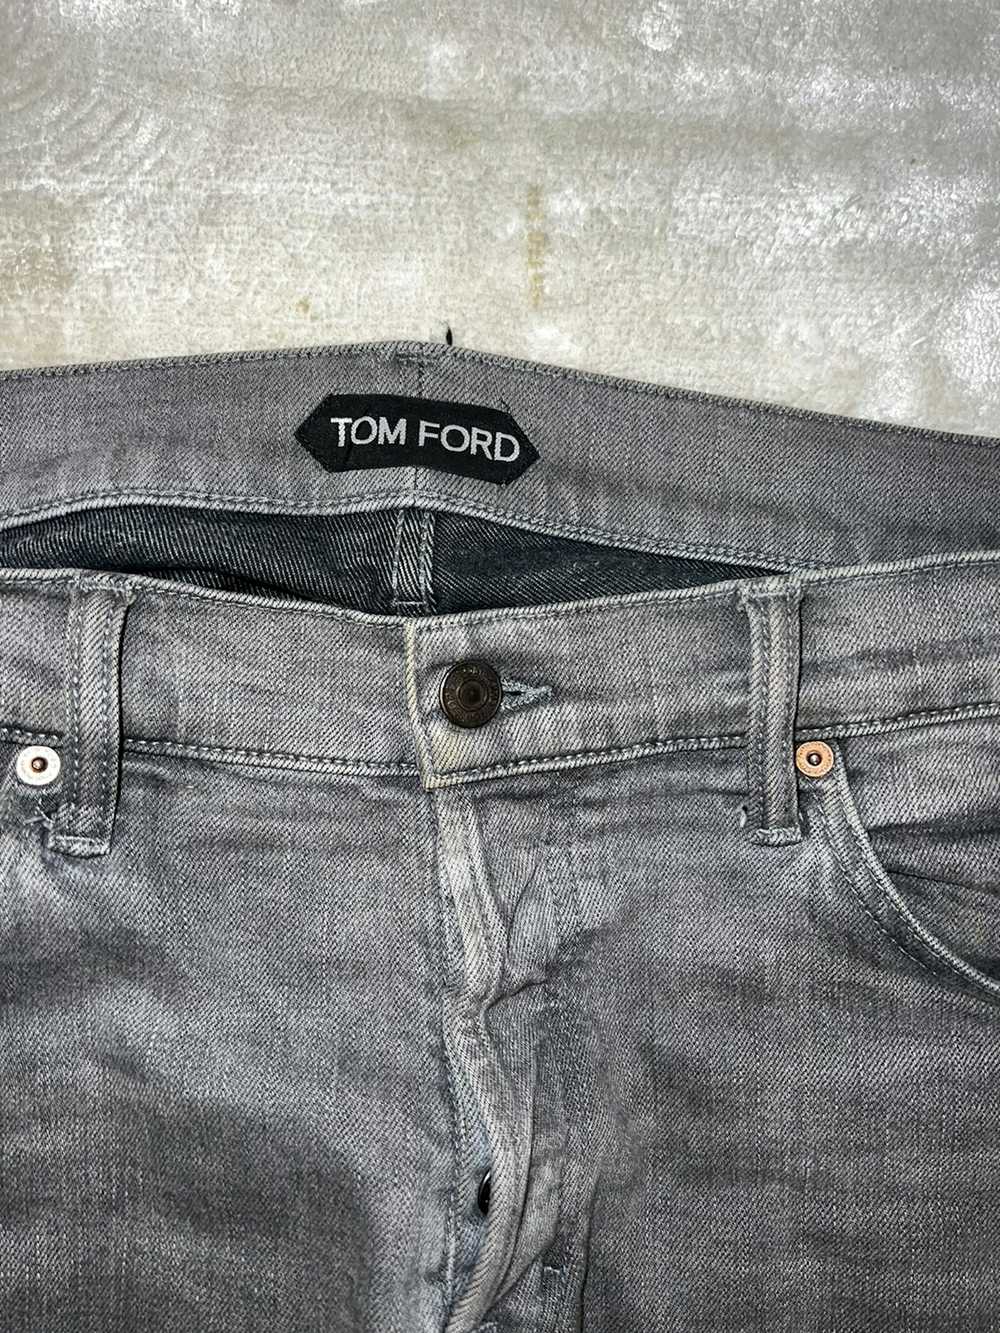 Tom Ford Tom Ford Selvedge denim jeans - image 7